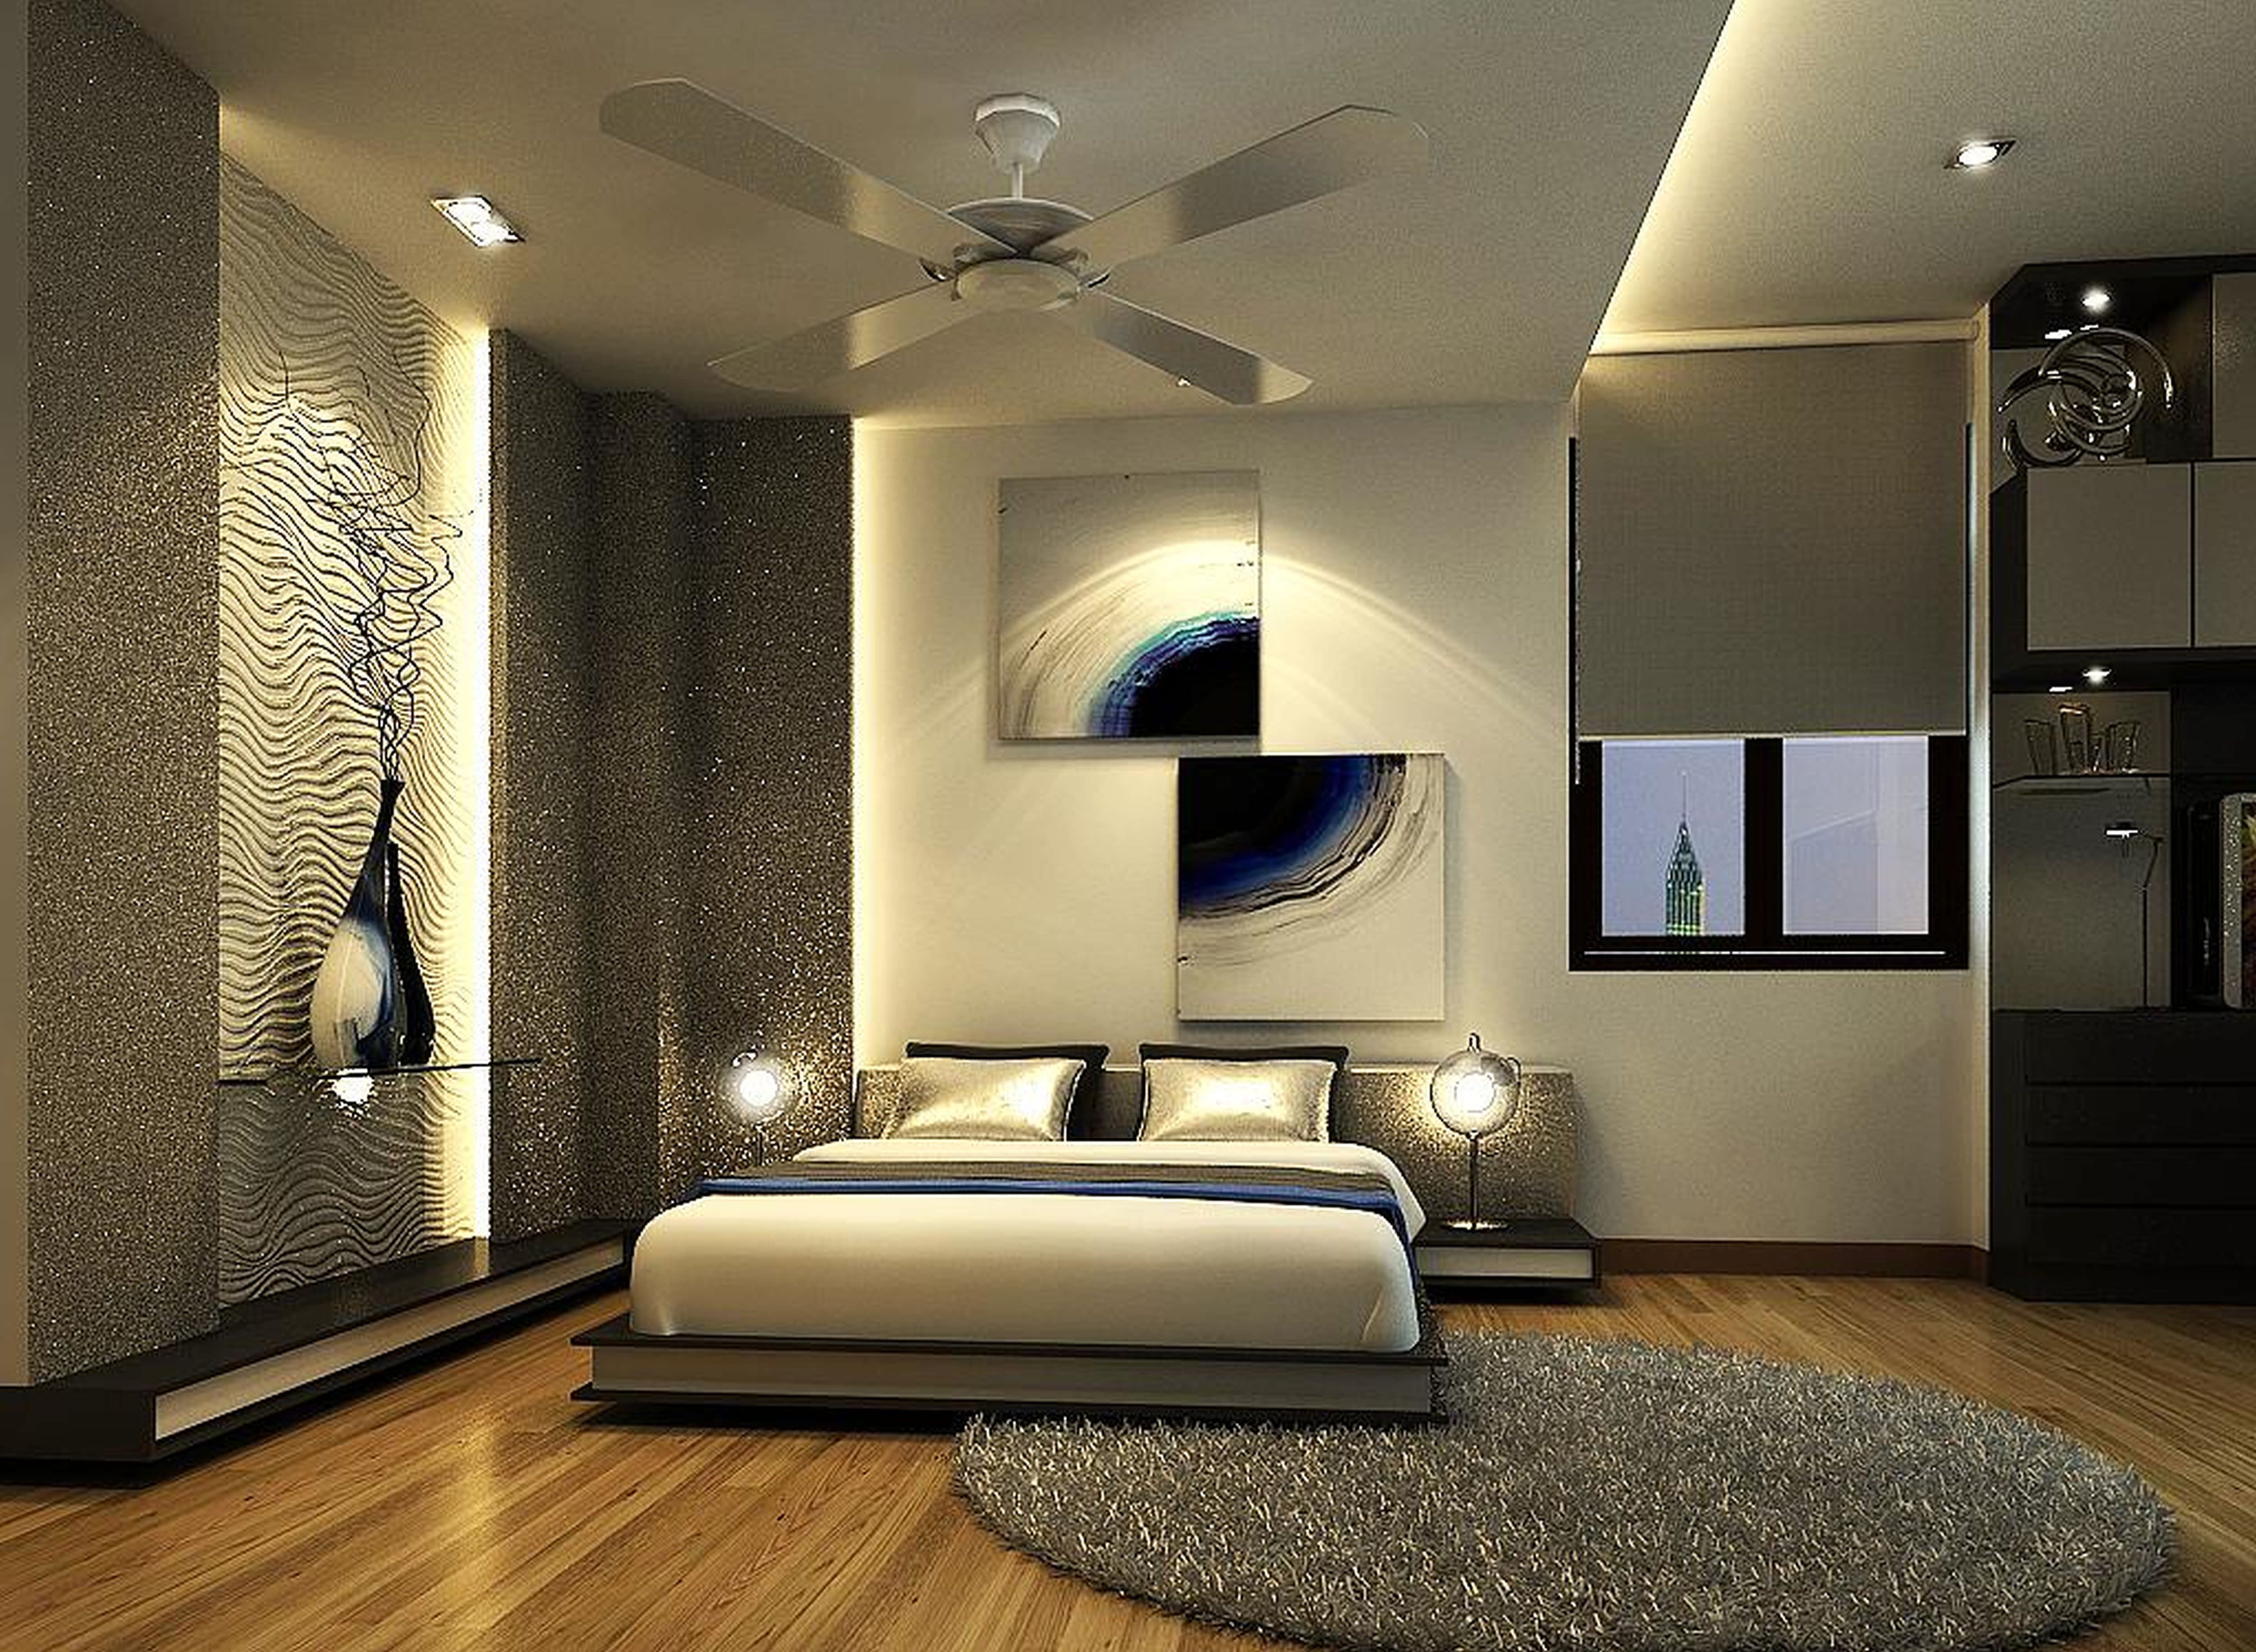 15+ Royal Bedroom Designs, Decorating Ideas Design